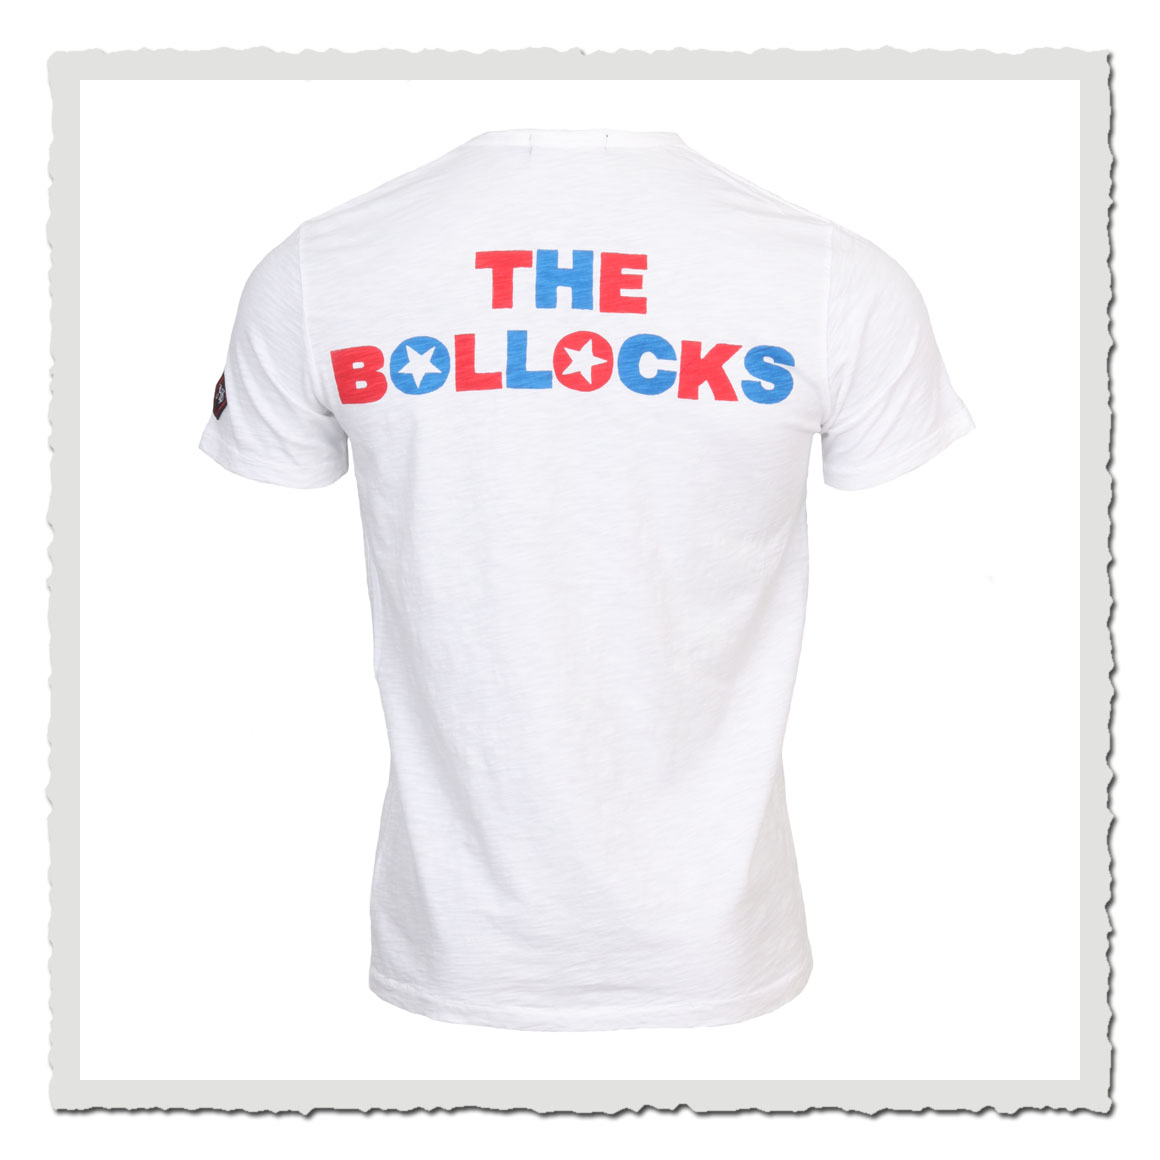 The Bollocks white